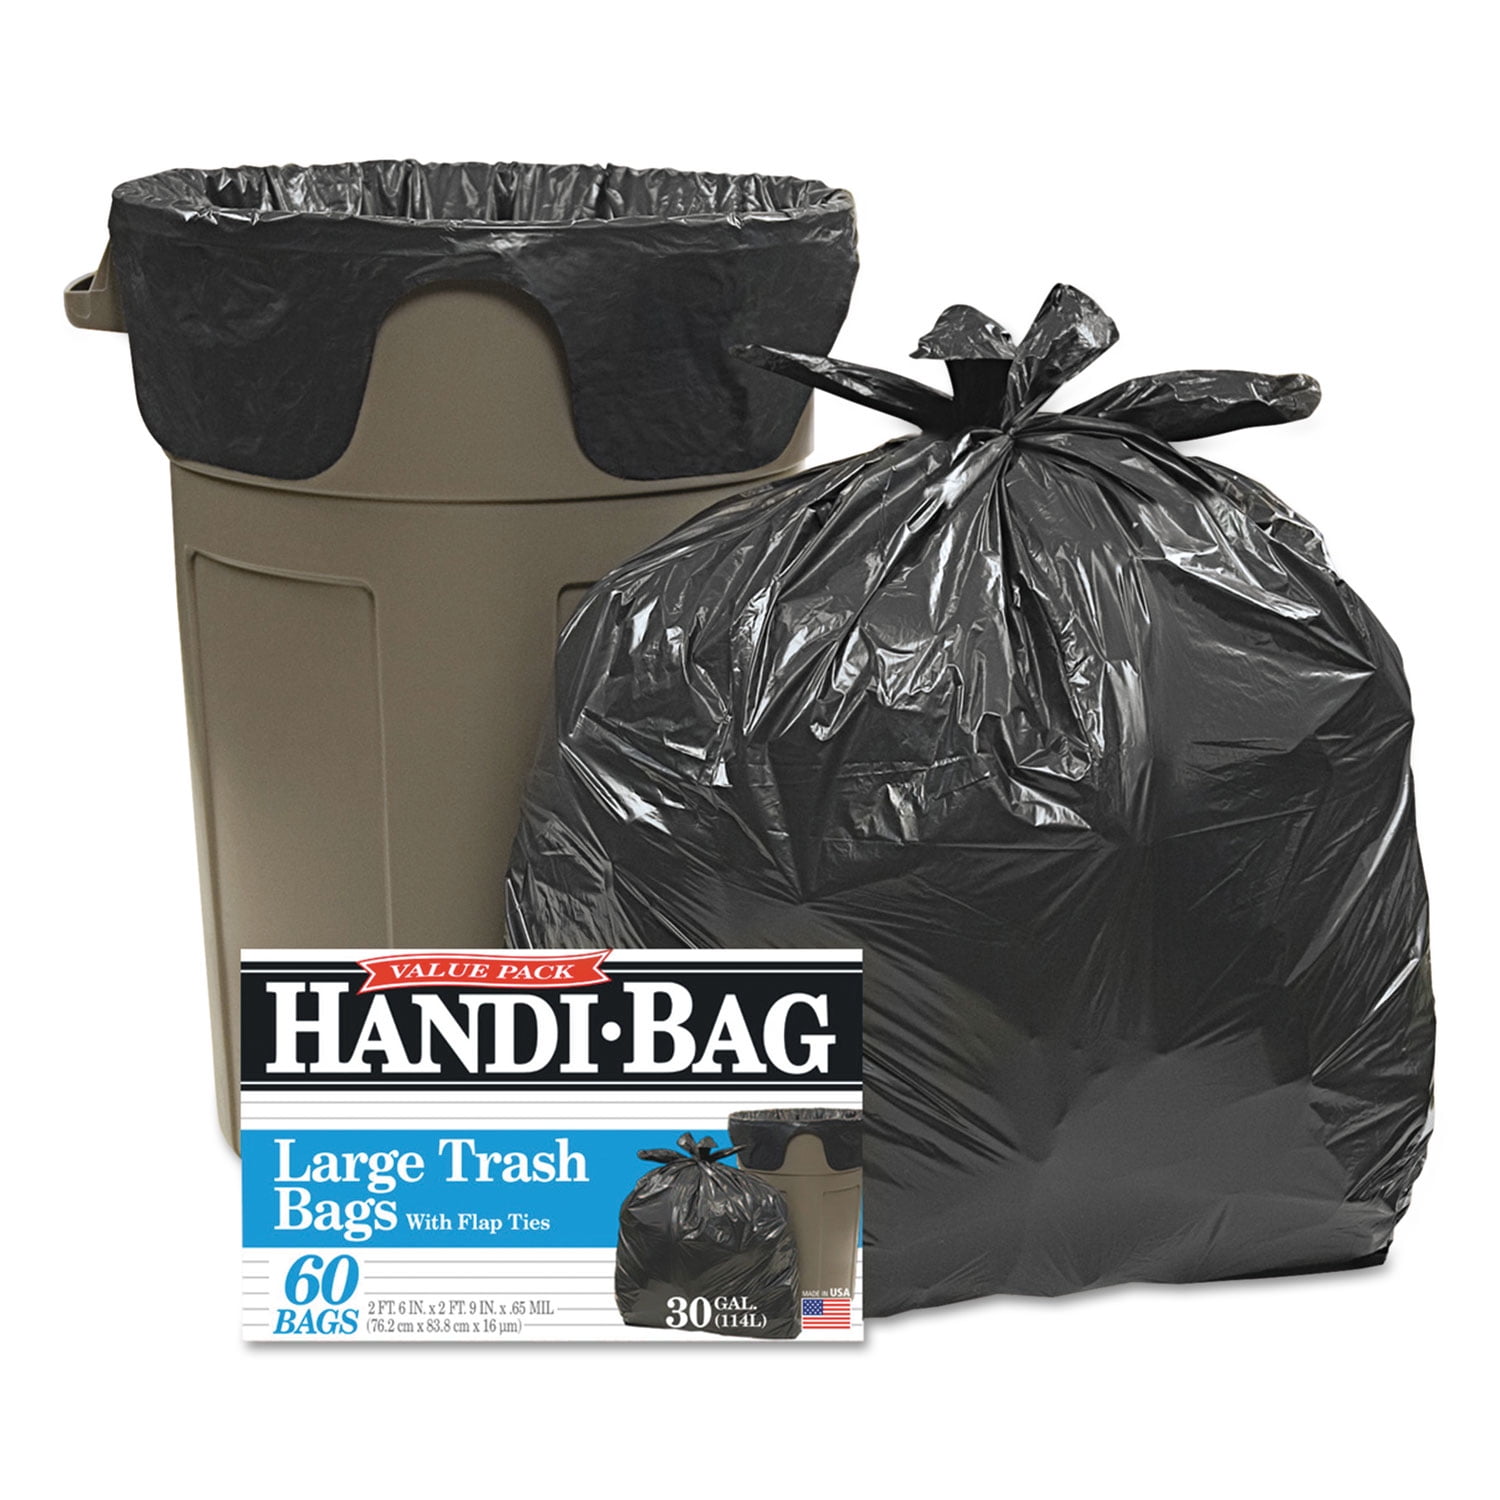 10-Gallon Kitchen Trash Bag, Drawstring Garbage Bags 30-Count Box